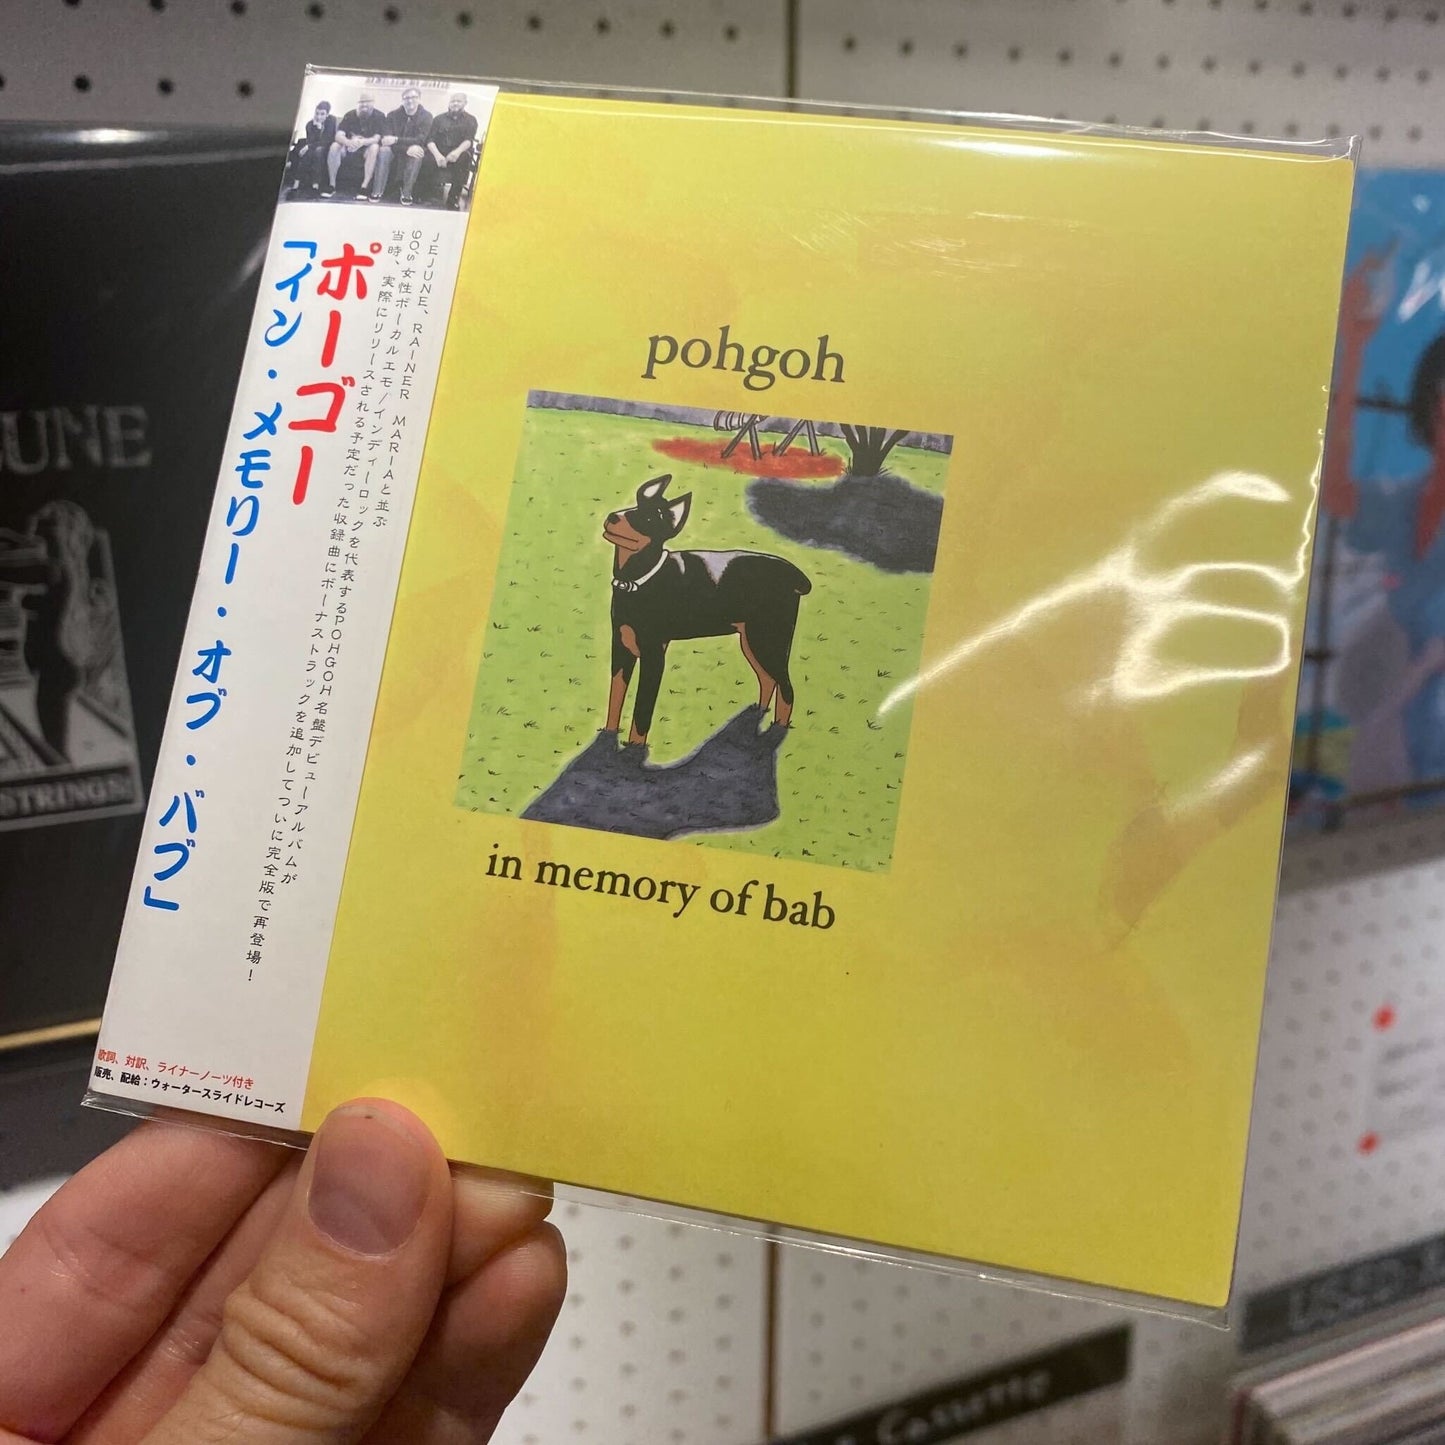 Pohgoh - "In Memory Of Bab" (CD)